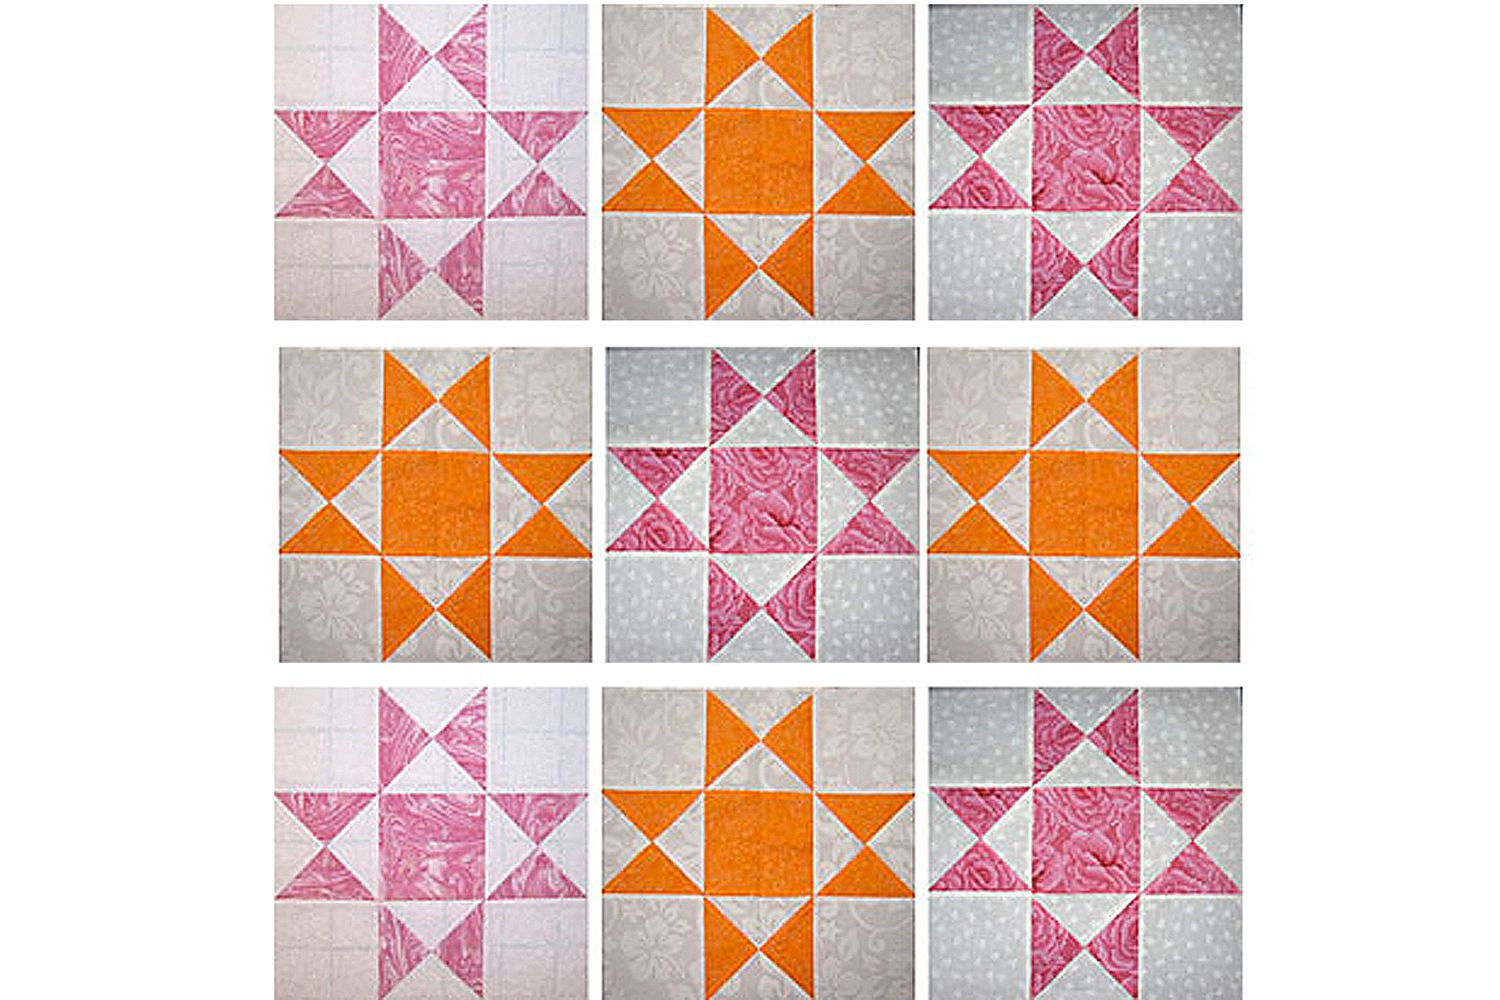 12 Ohio Star Quilt Block Pattern